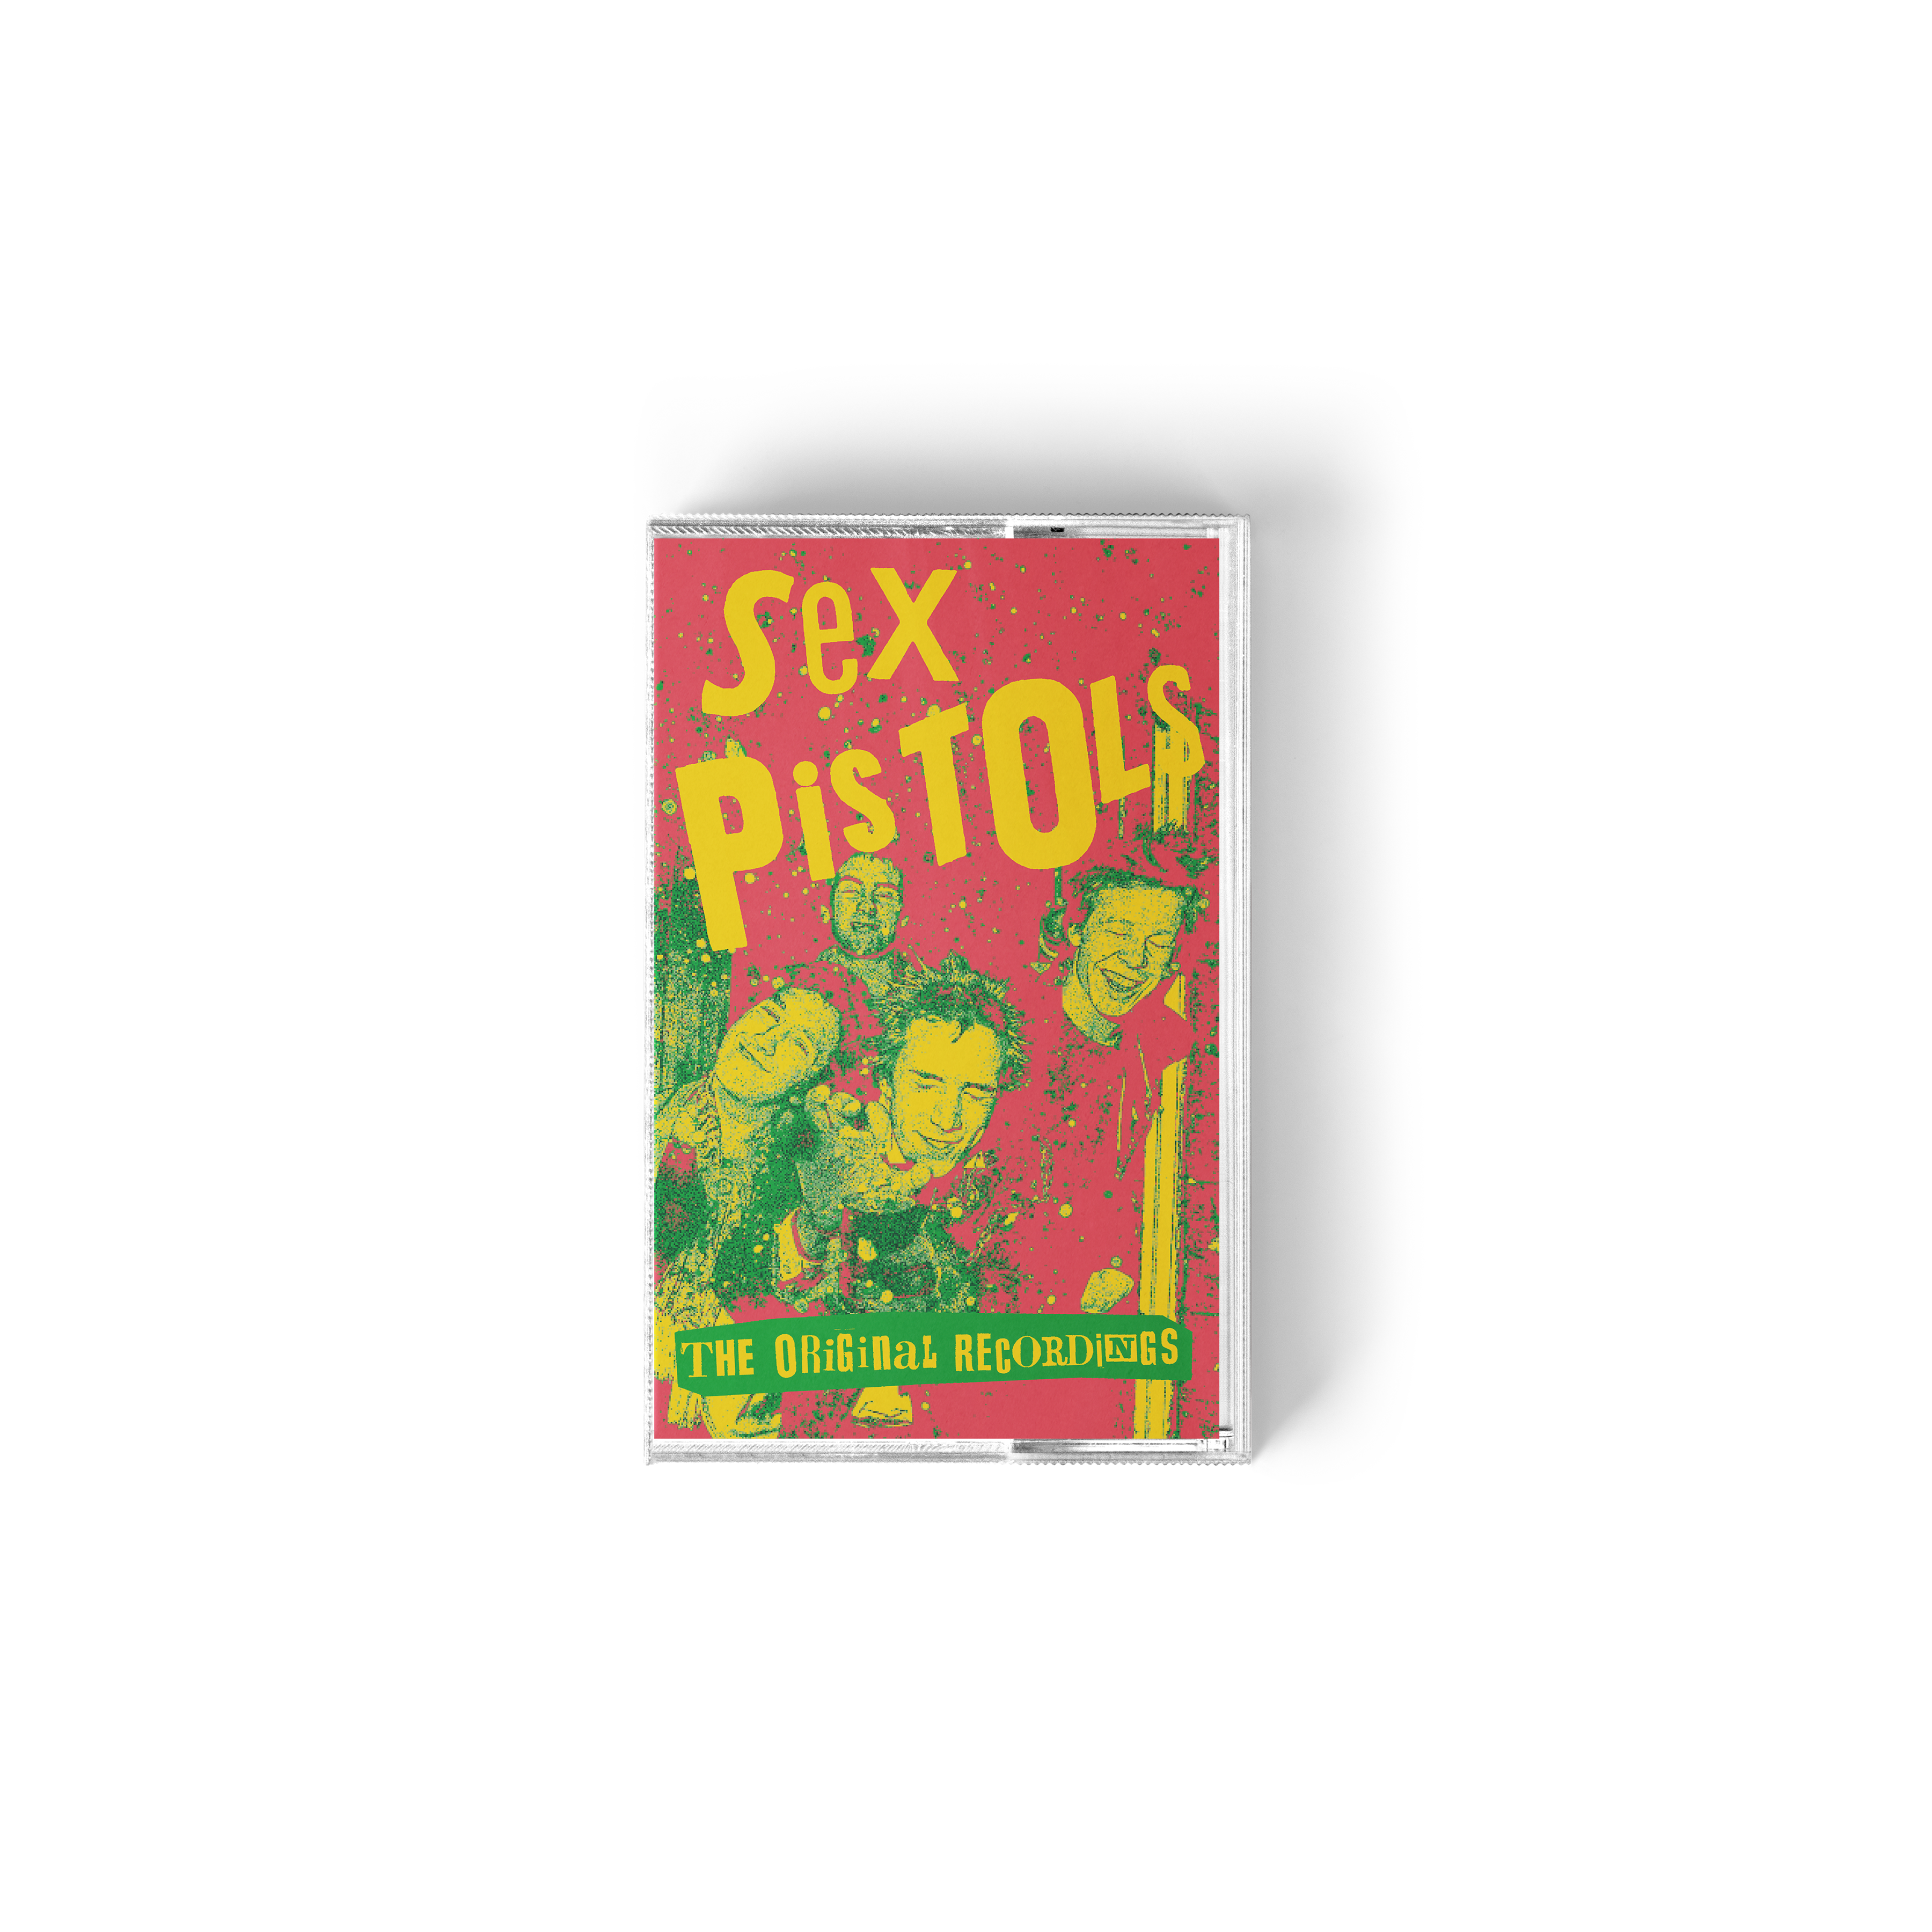 Sex Pistols - The Original Recordings Cassette 2